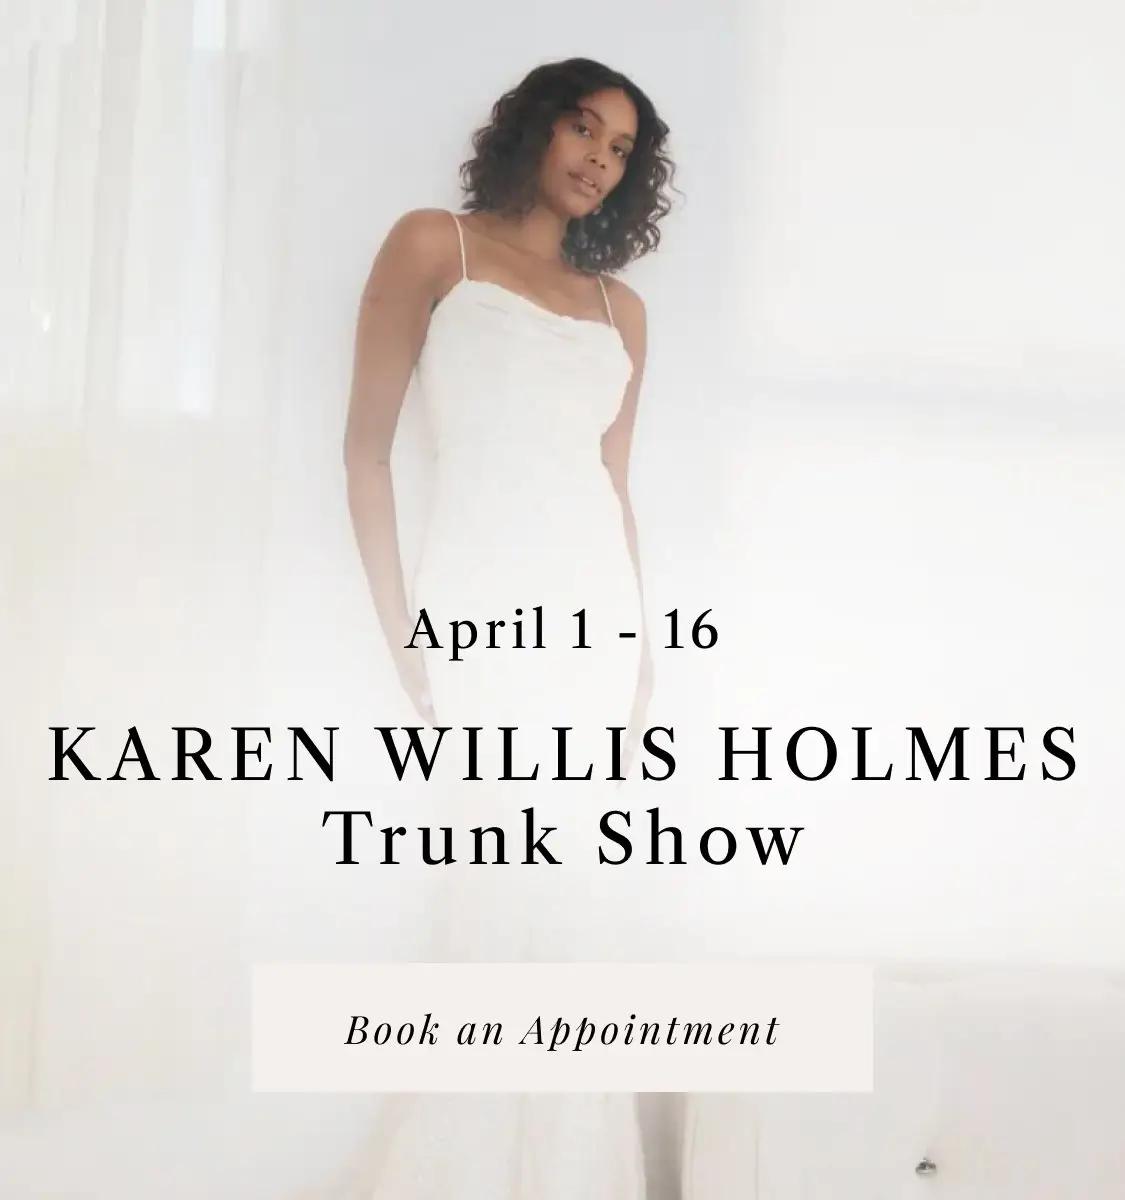 "Karen Willis Holmes Trunk Show" banner for mobile